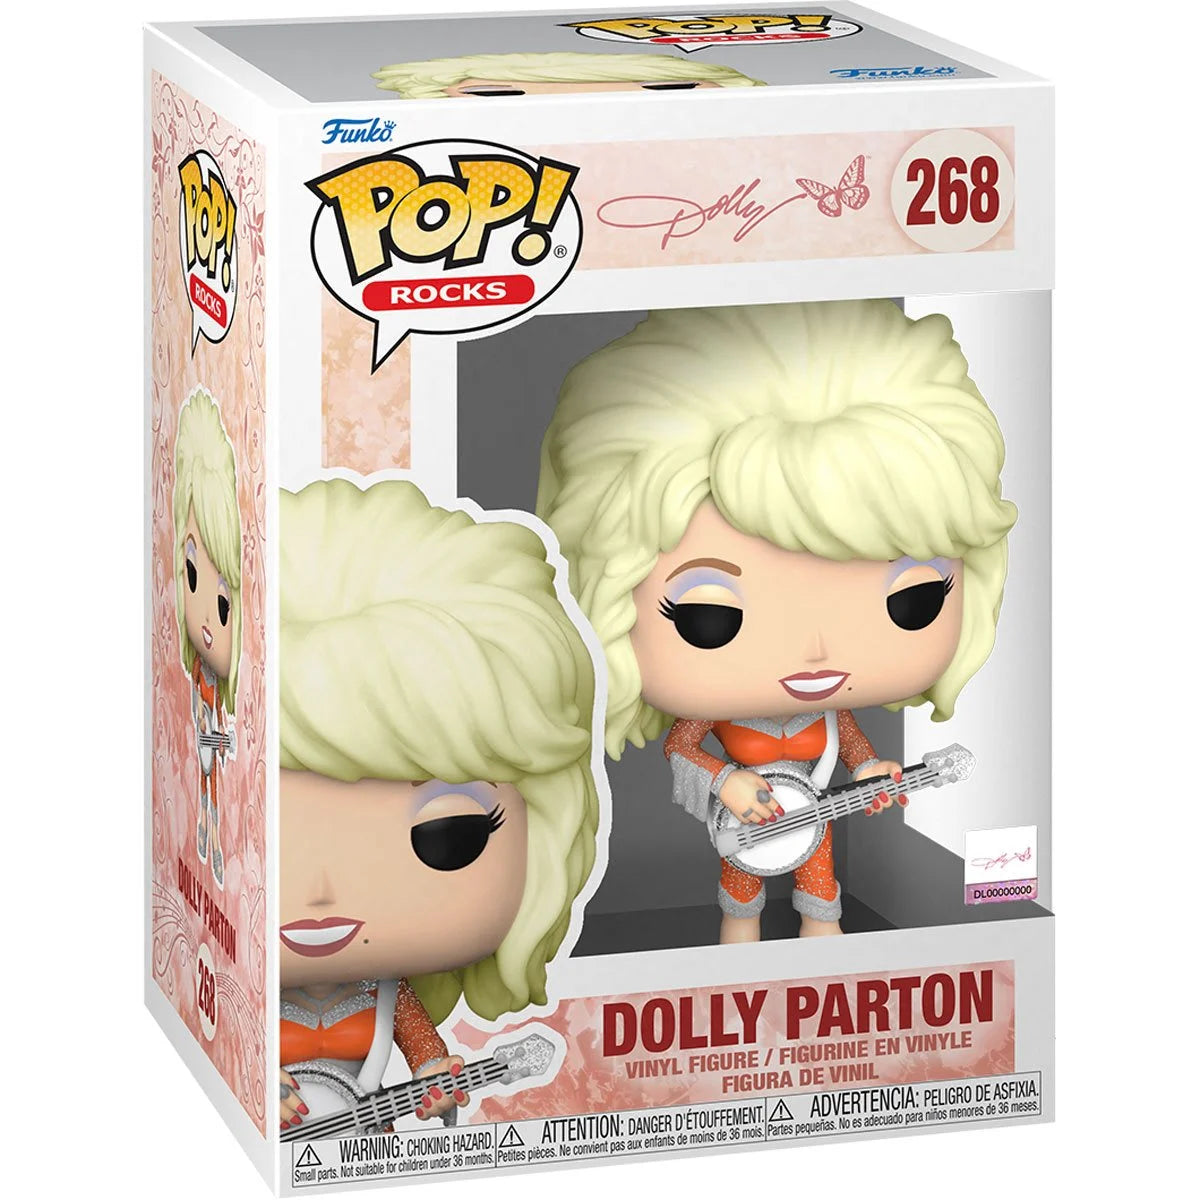 Dolly Parton Pop! Vinyl Figure